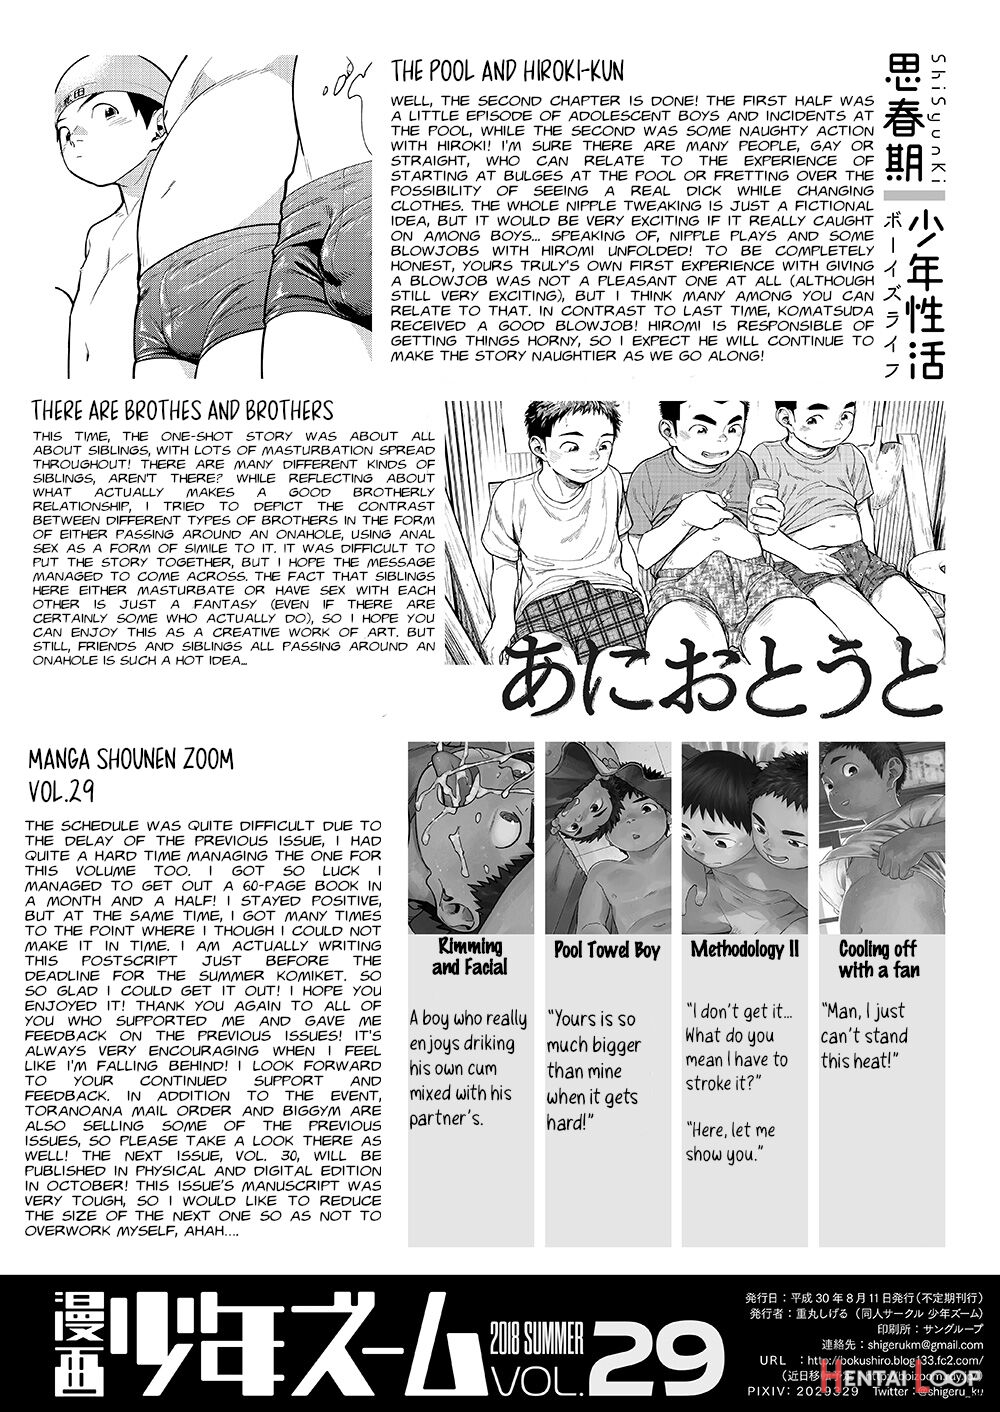 Manga Shounen Zoom Vol. 29 page 58